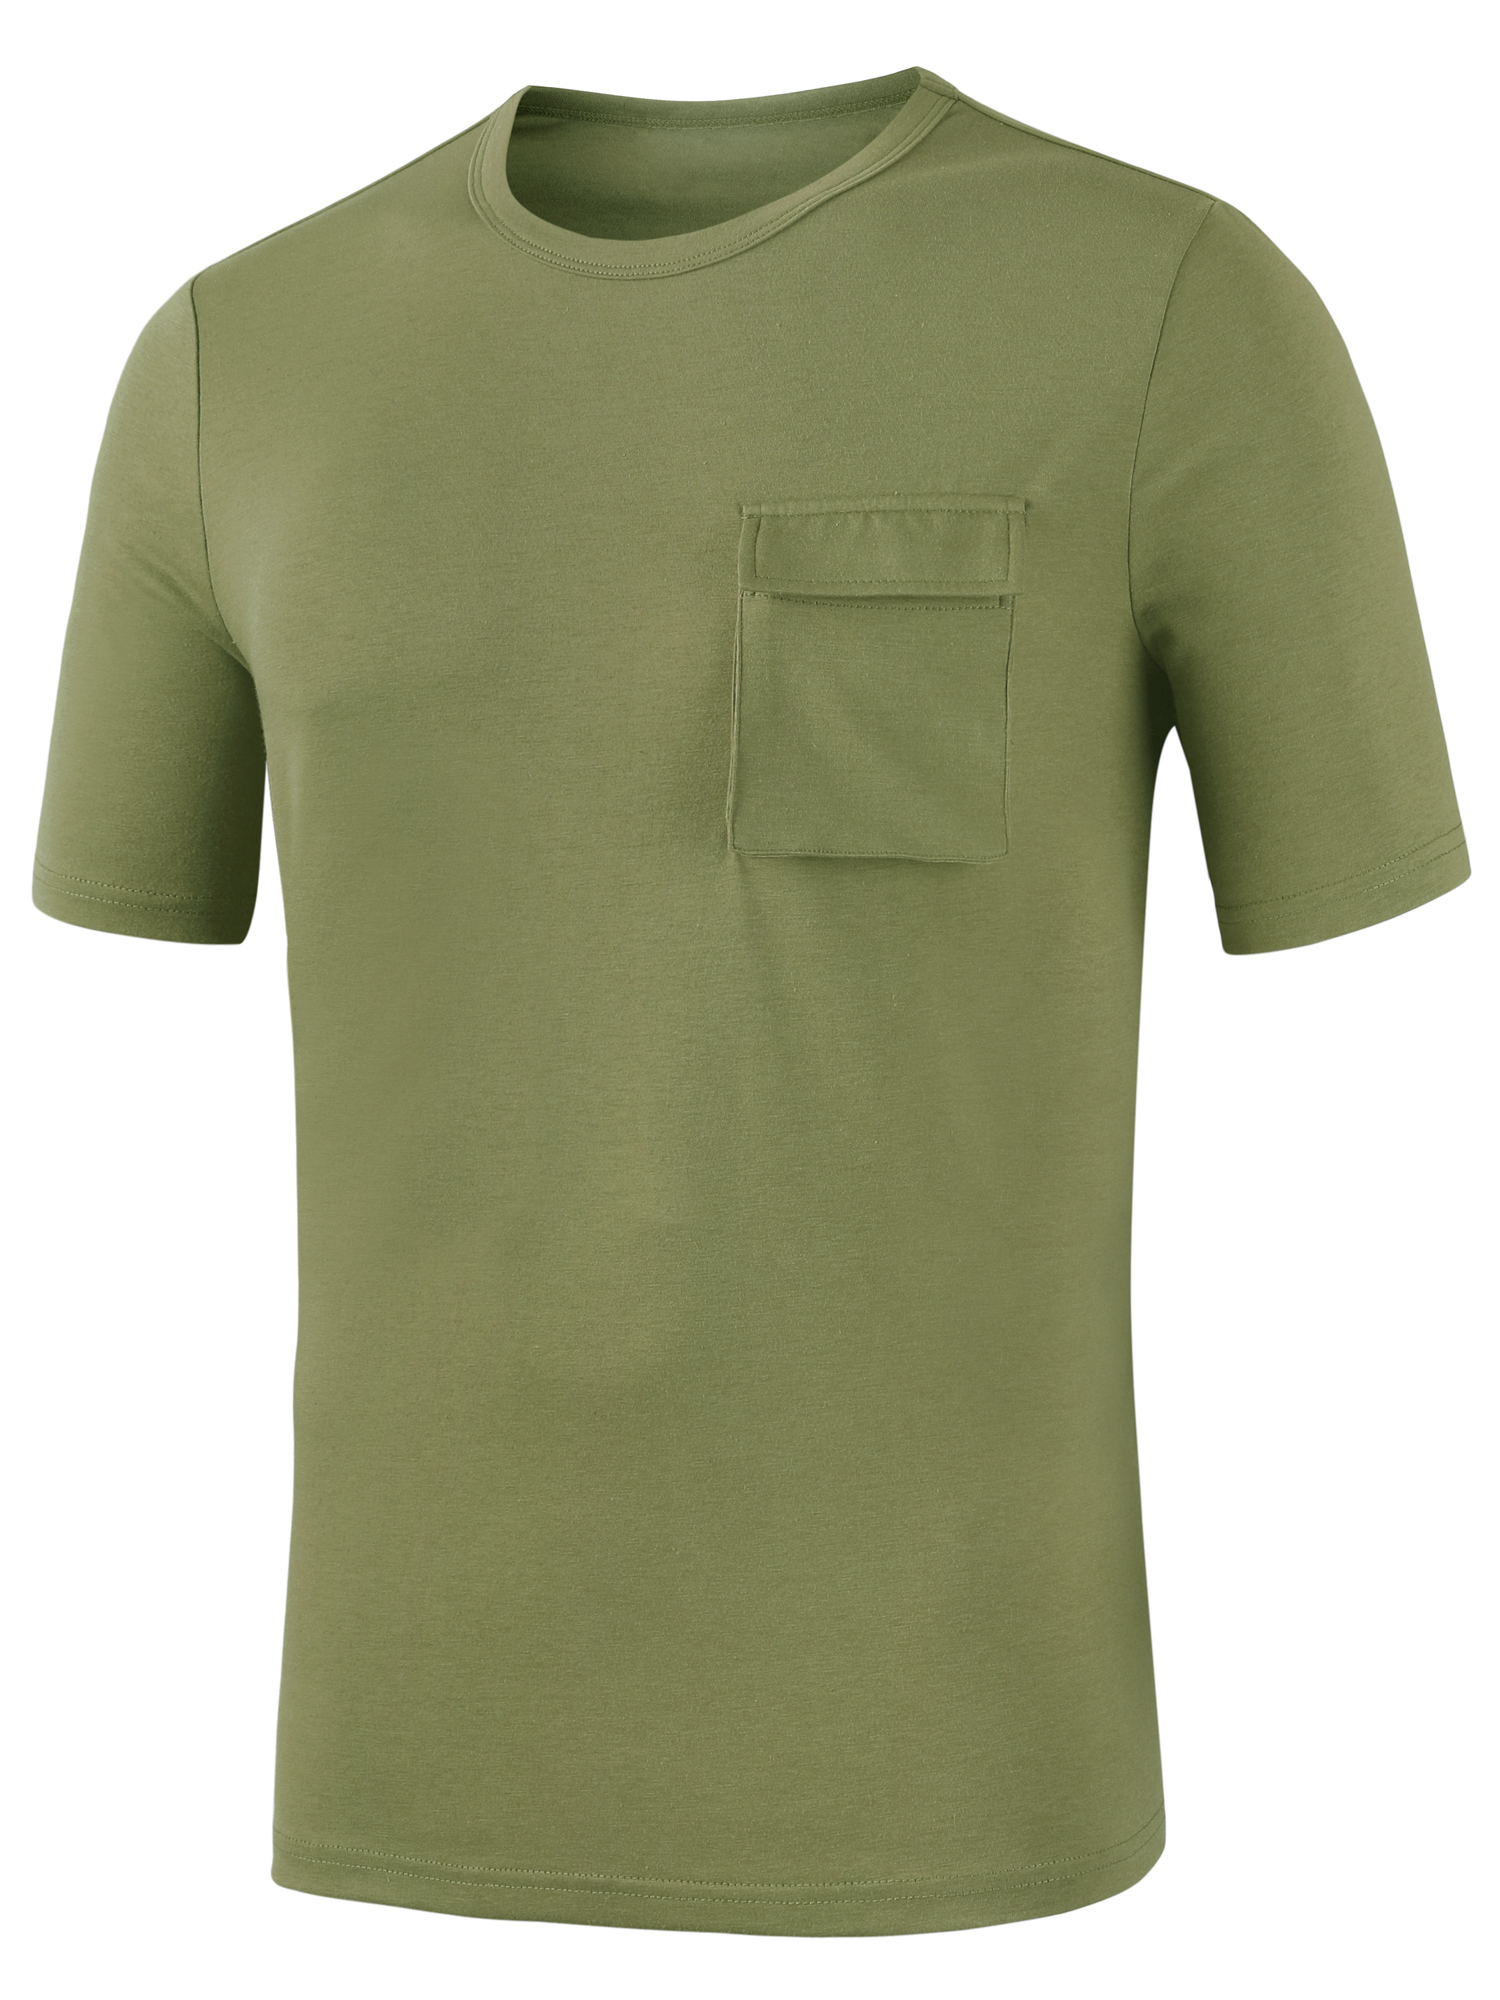 MODA NOVA Big & Tall Men's Crew Neck Short Sleeve Classic Cargo Pocket T-shirts - image 3 of 5